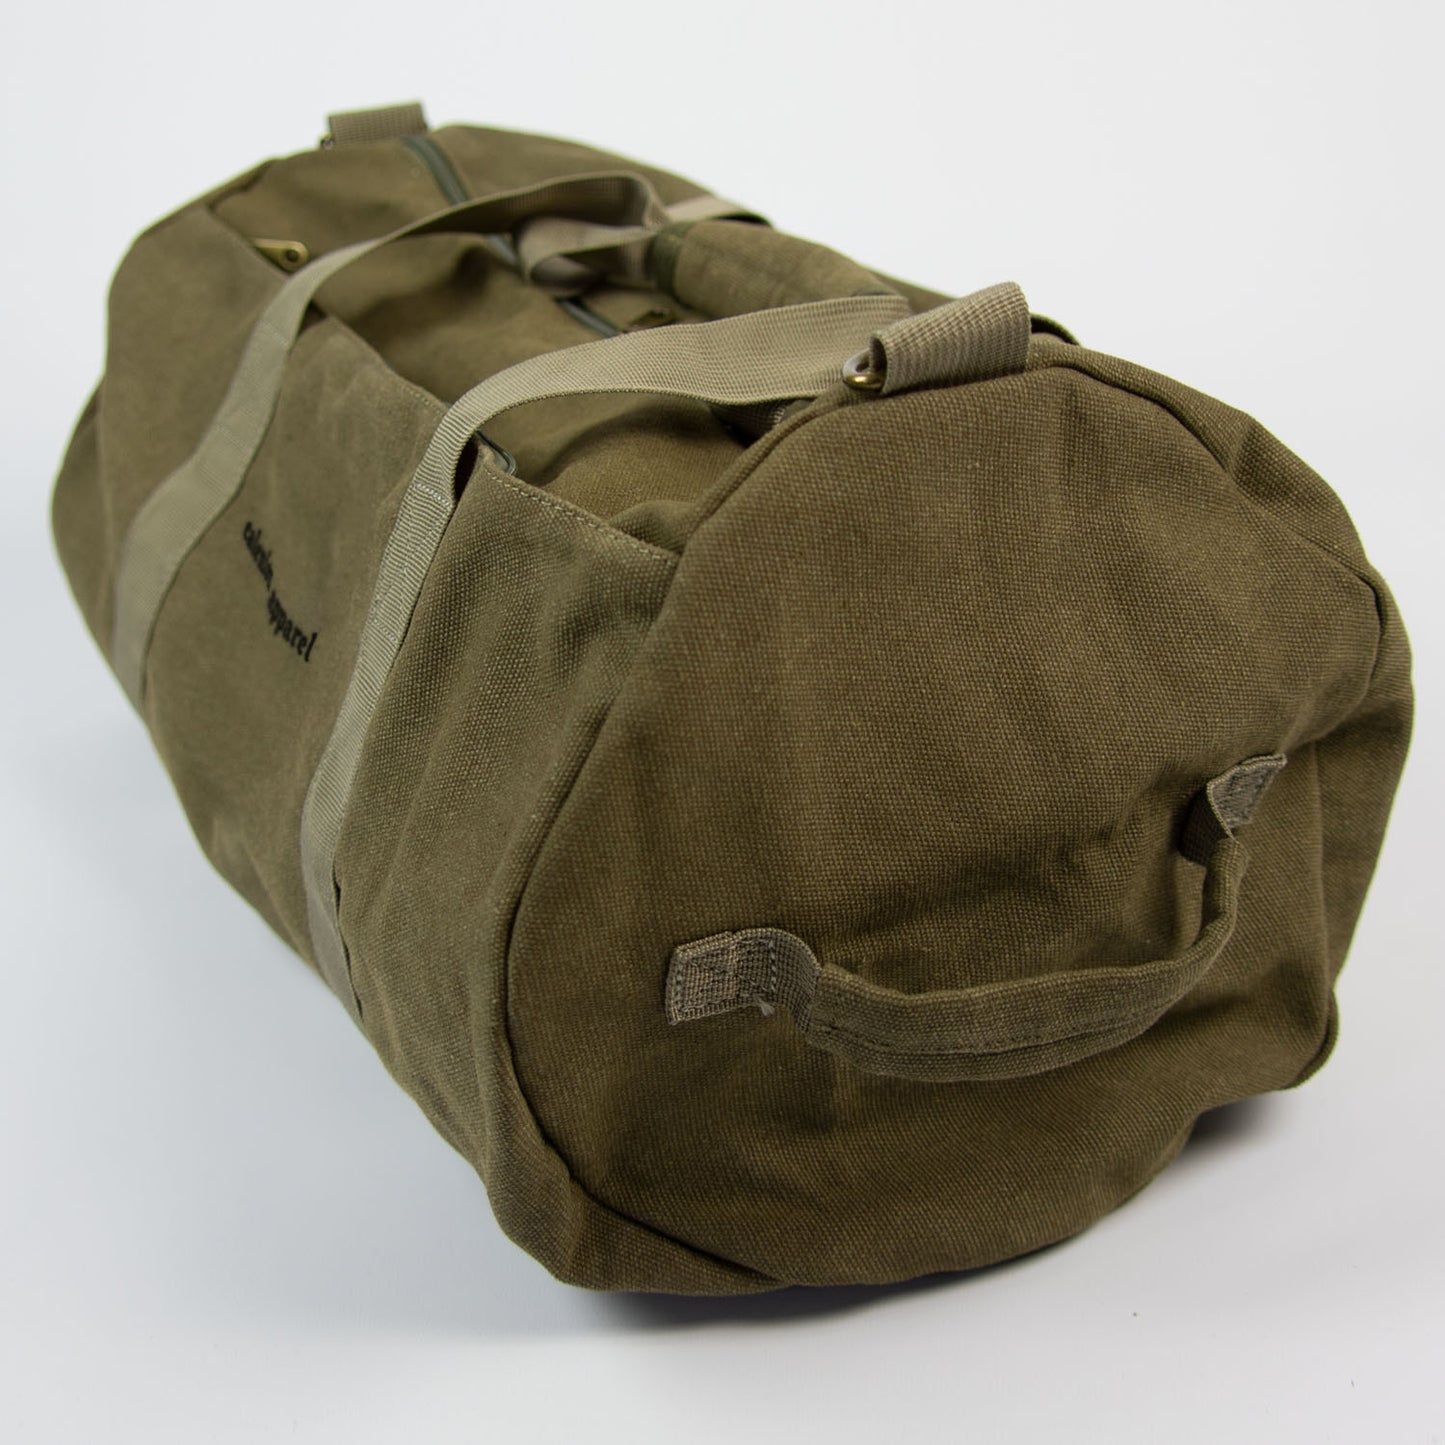 Calenion Vintage Canvas Barrel Bag (Military Green)